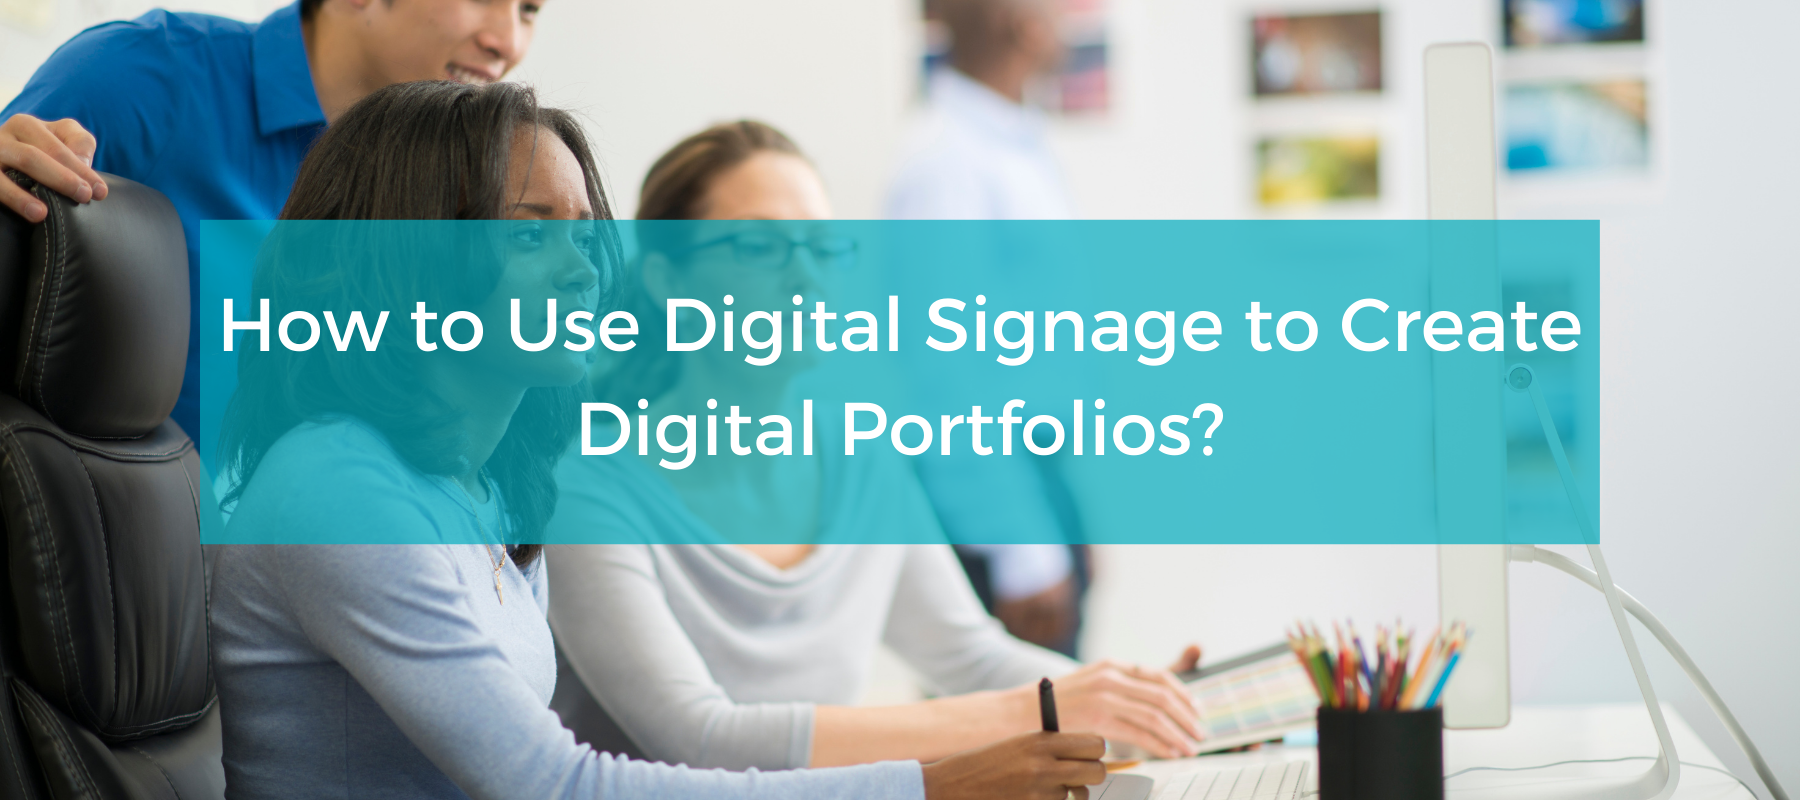 How to Use Digital Signage to Create Digital Portfolios